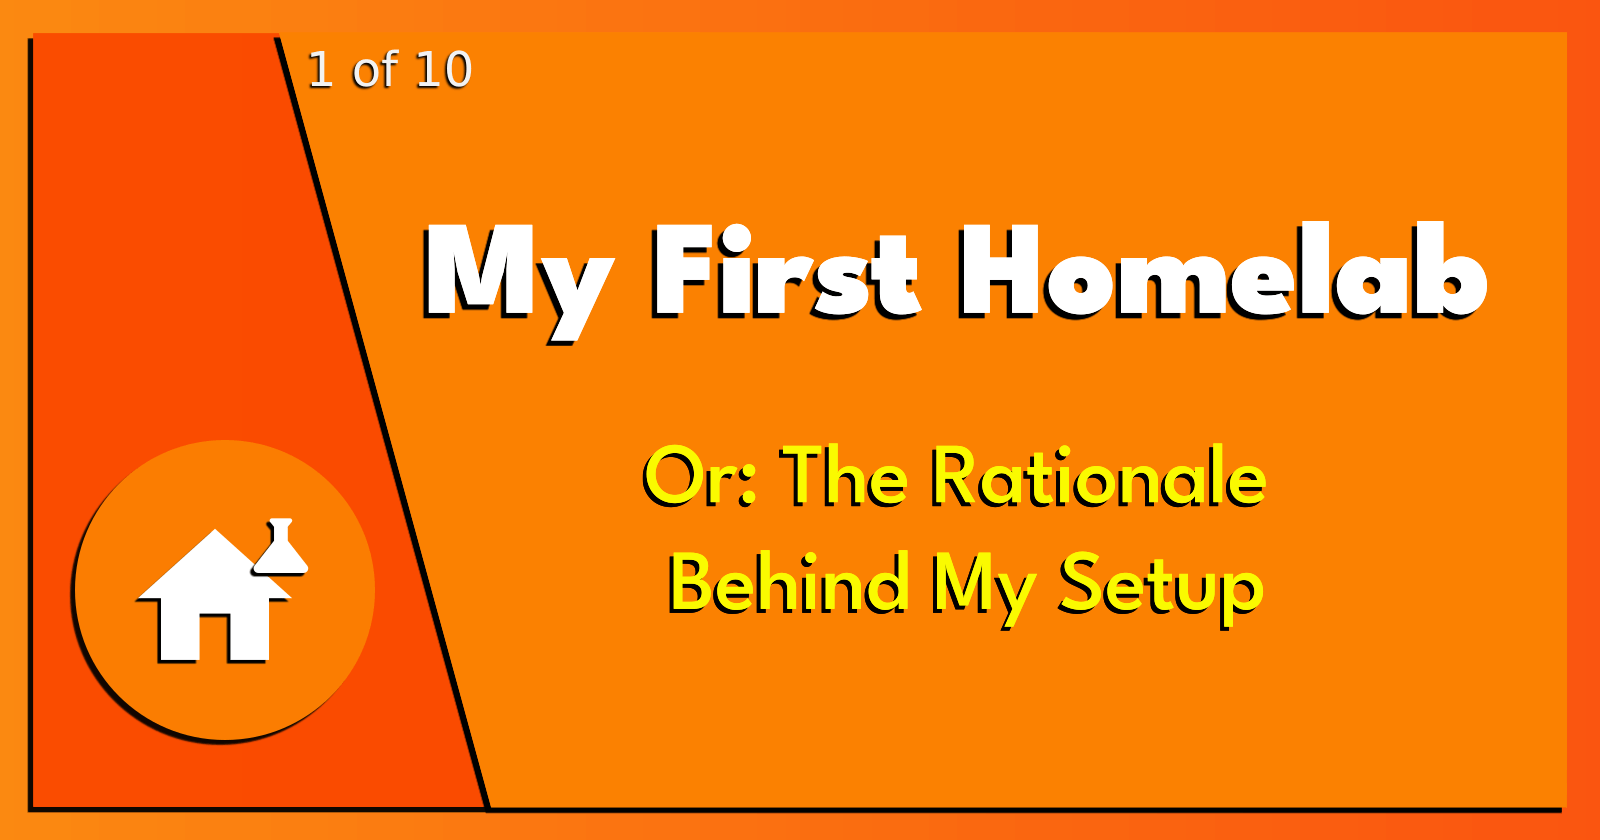 1 of 10: My First Homelab.